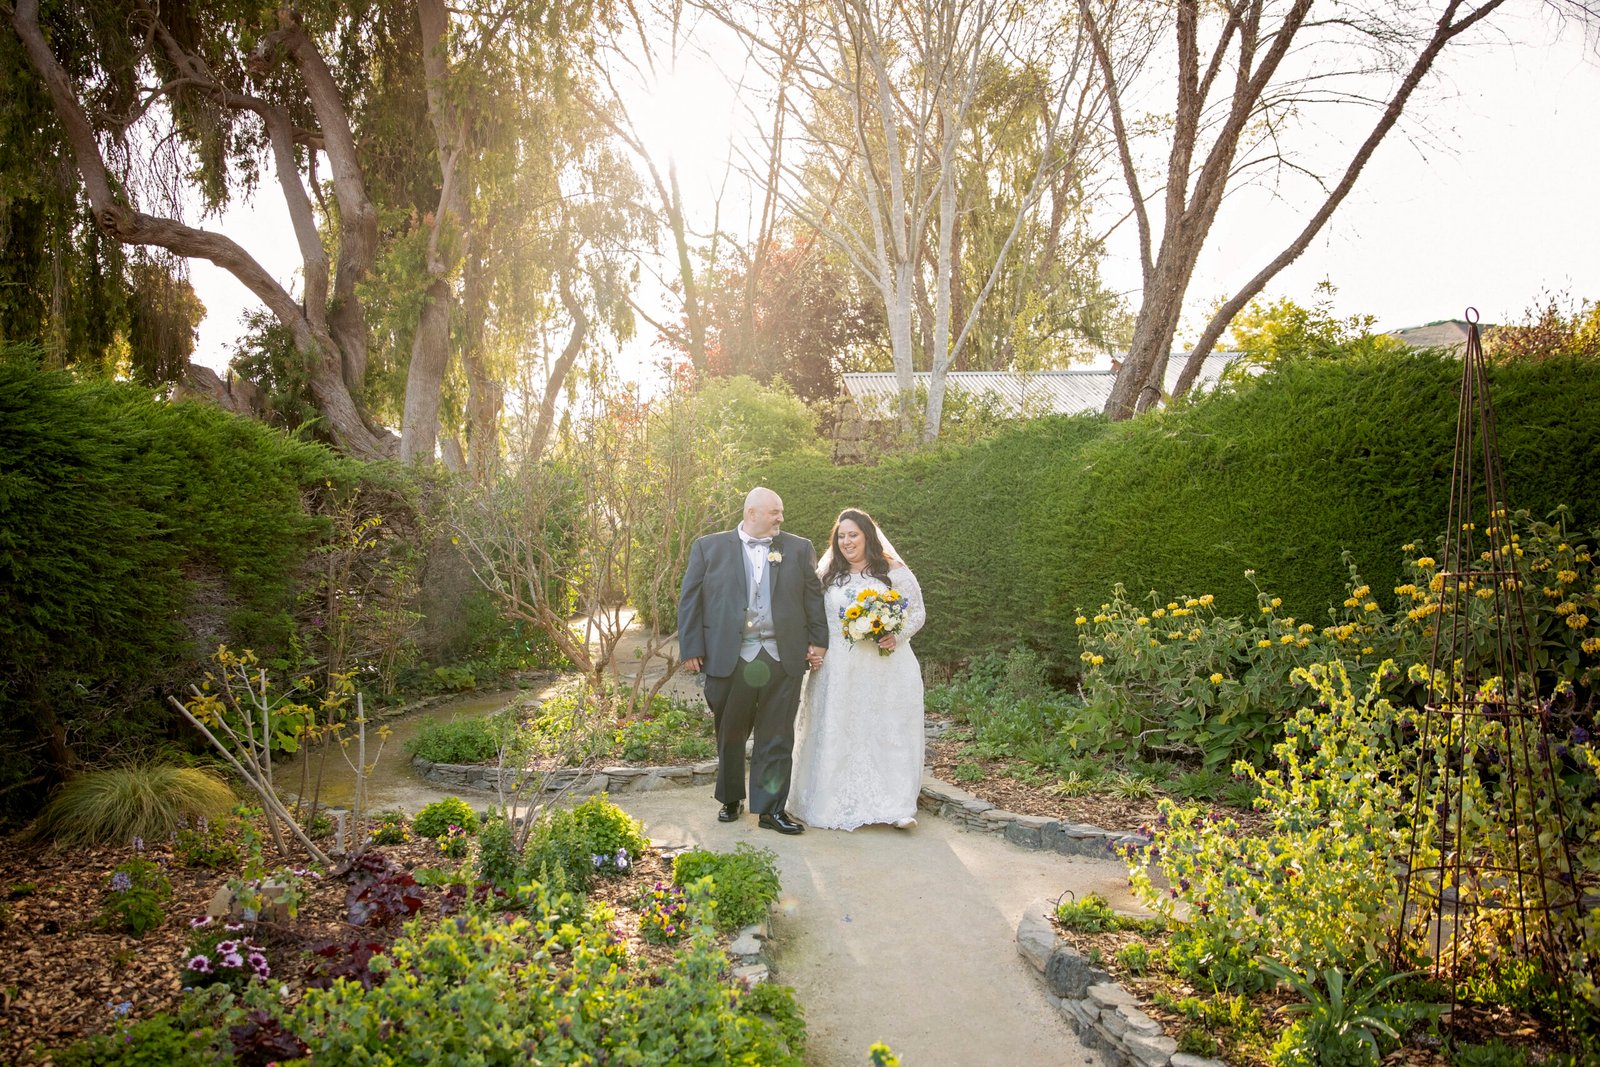 couple walking along a path in a garden after their wedding